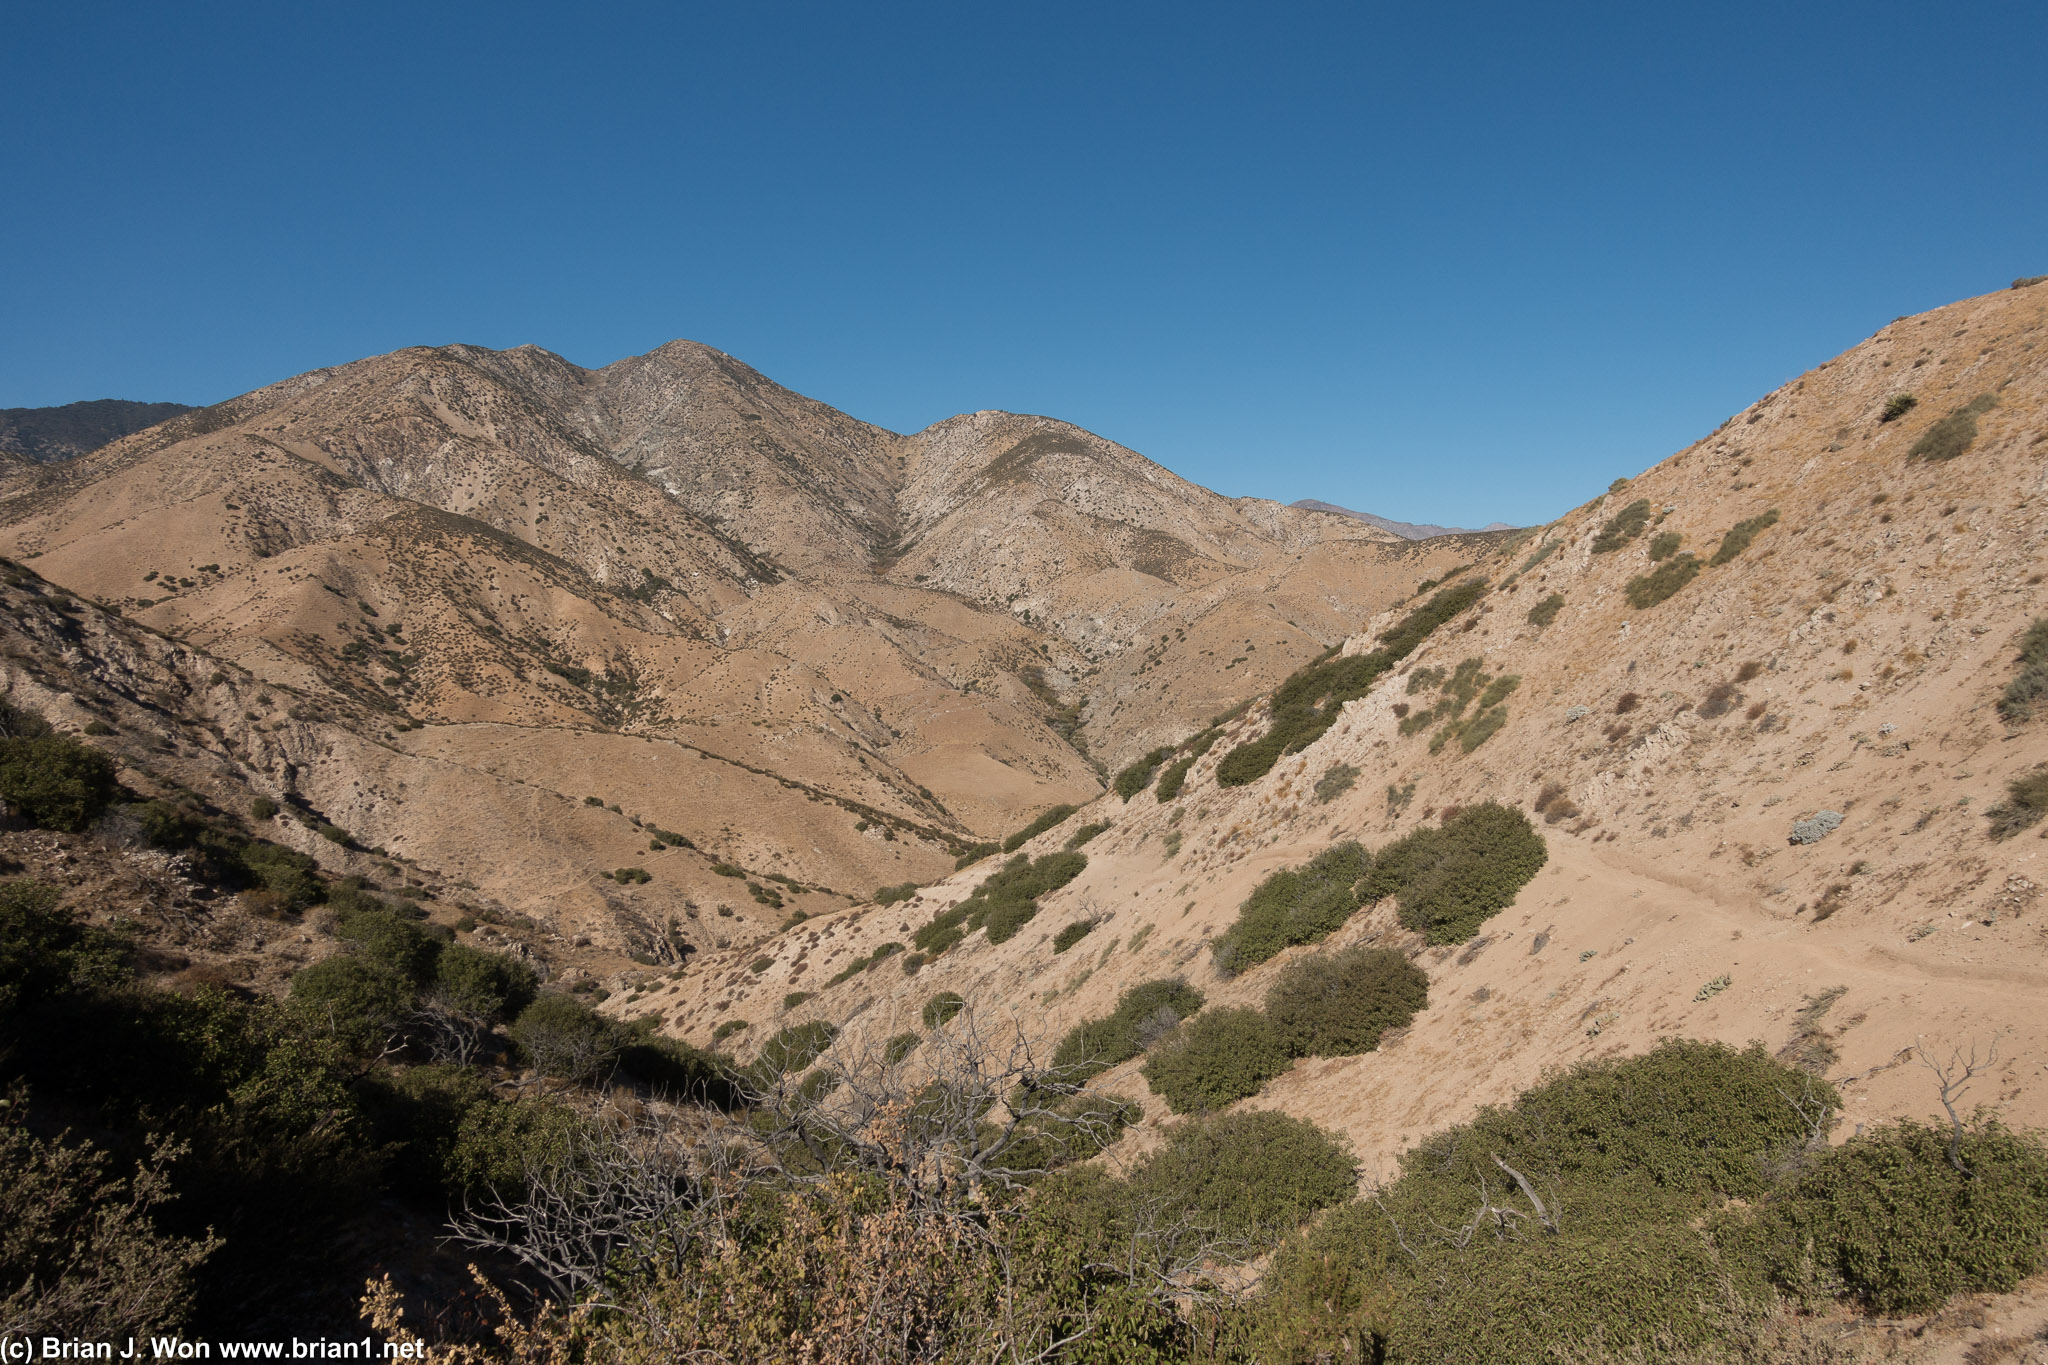 Very dry. Peak elevation on this ridge about 3,000 feet.